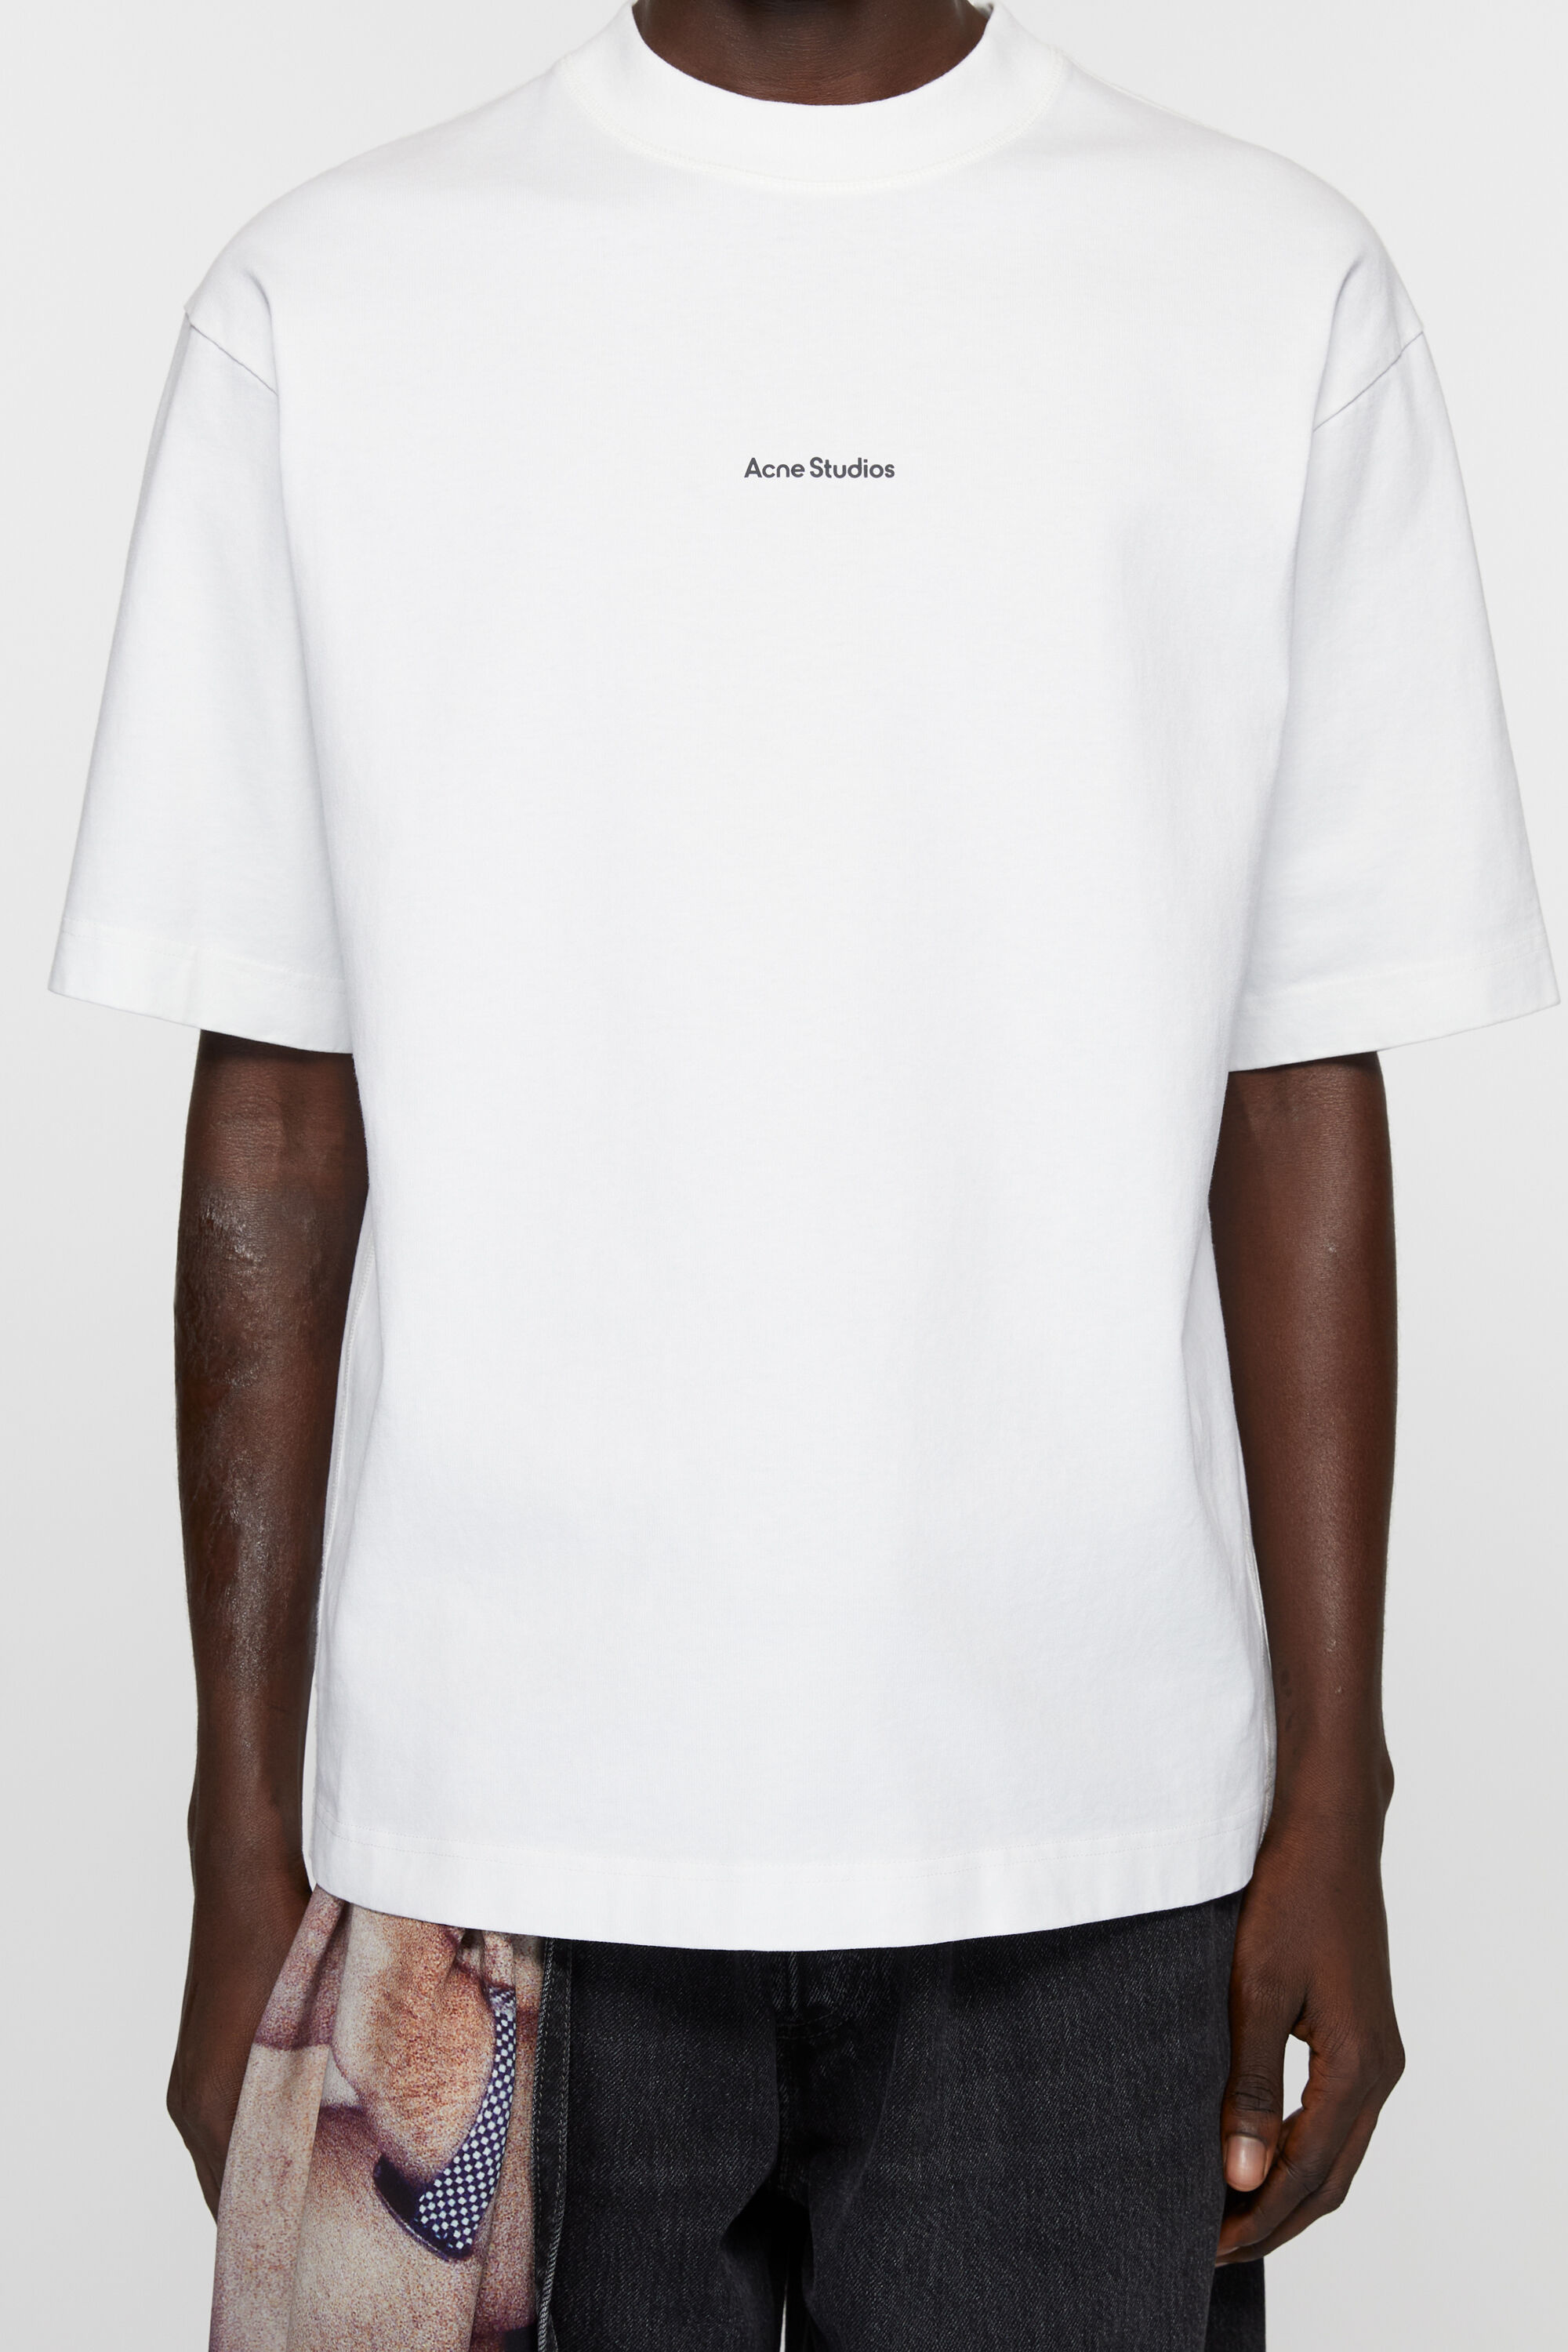 AcneStudios【極美品】Acne Studios logo Tシャツ Mサイズ